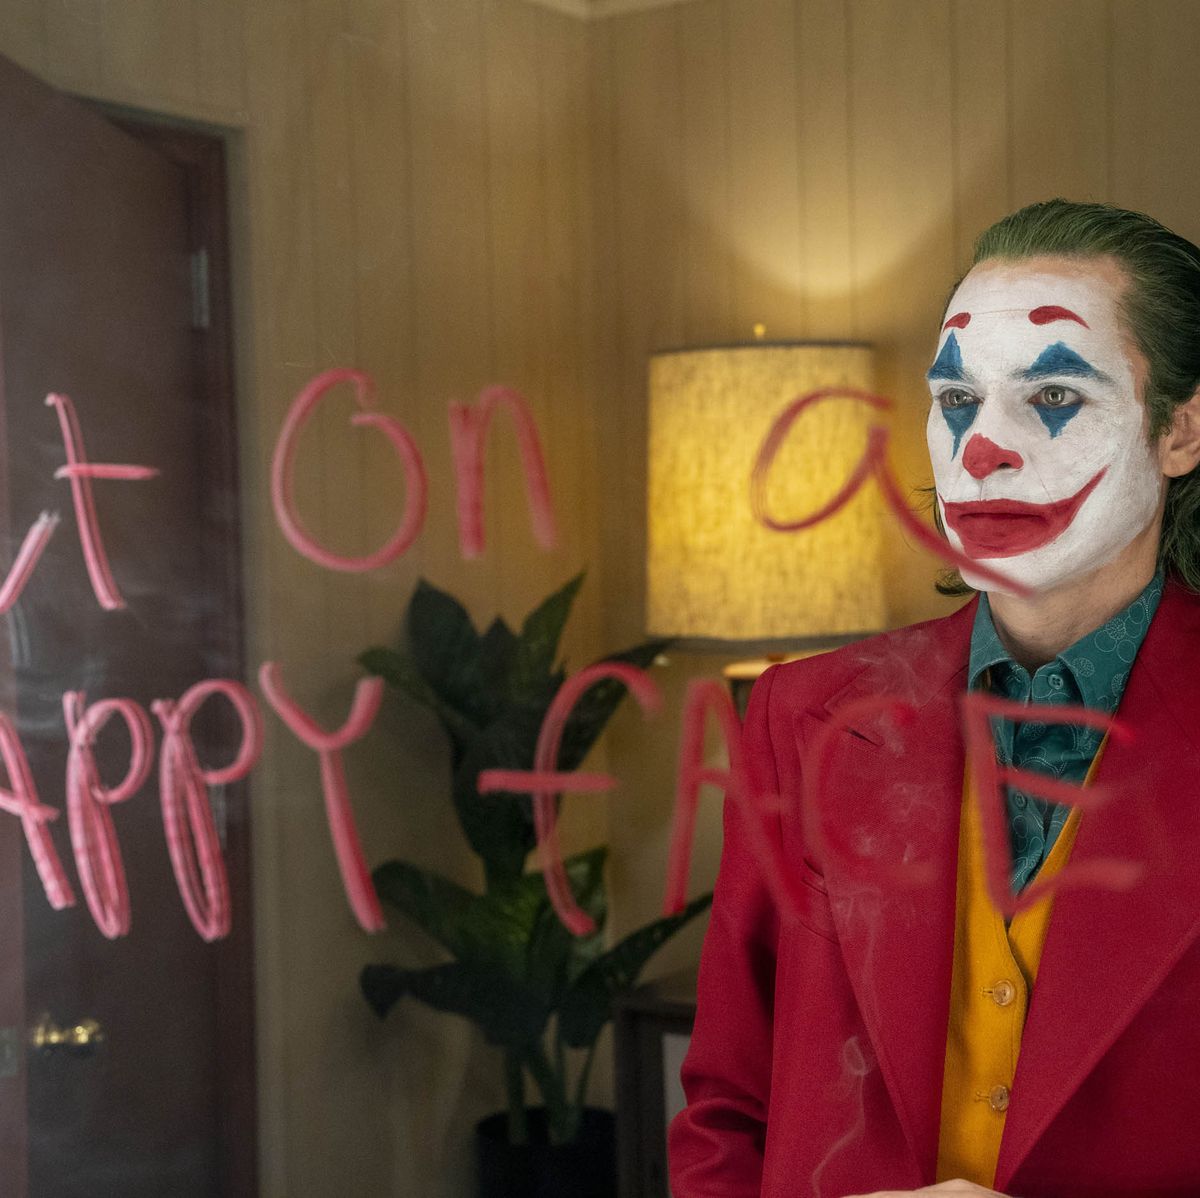 Joker' Review: The Movie Has a Profound Misunderstanding of ...